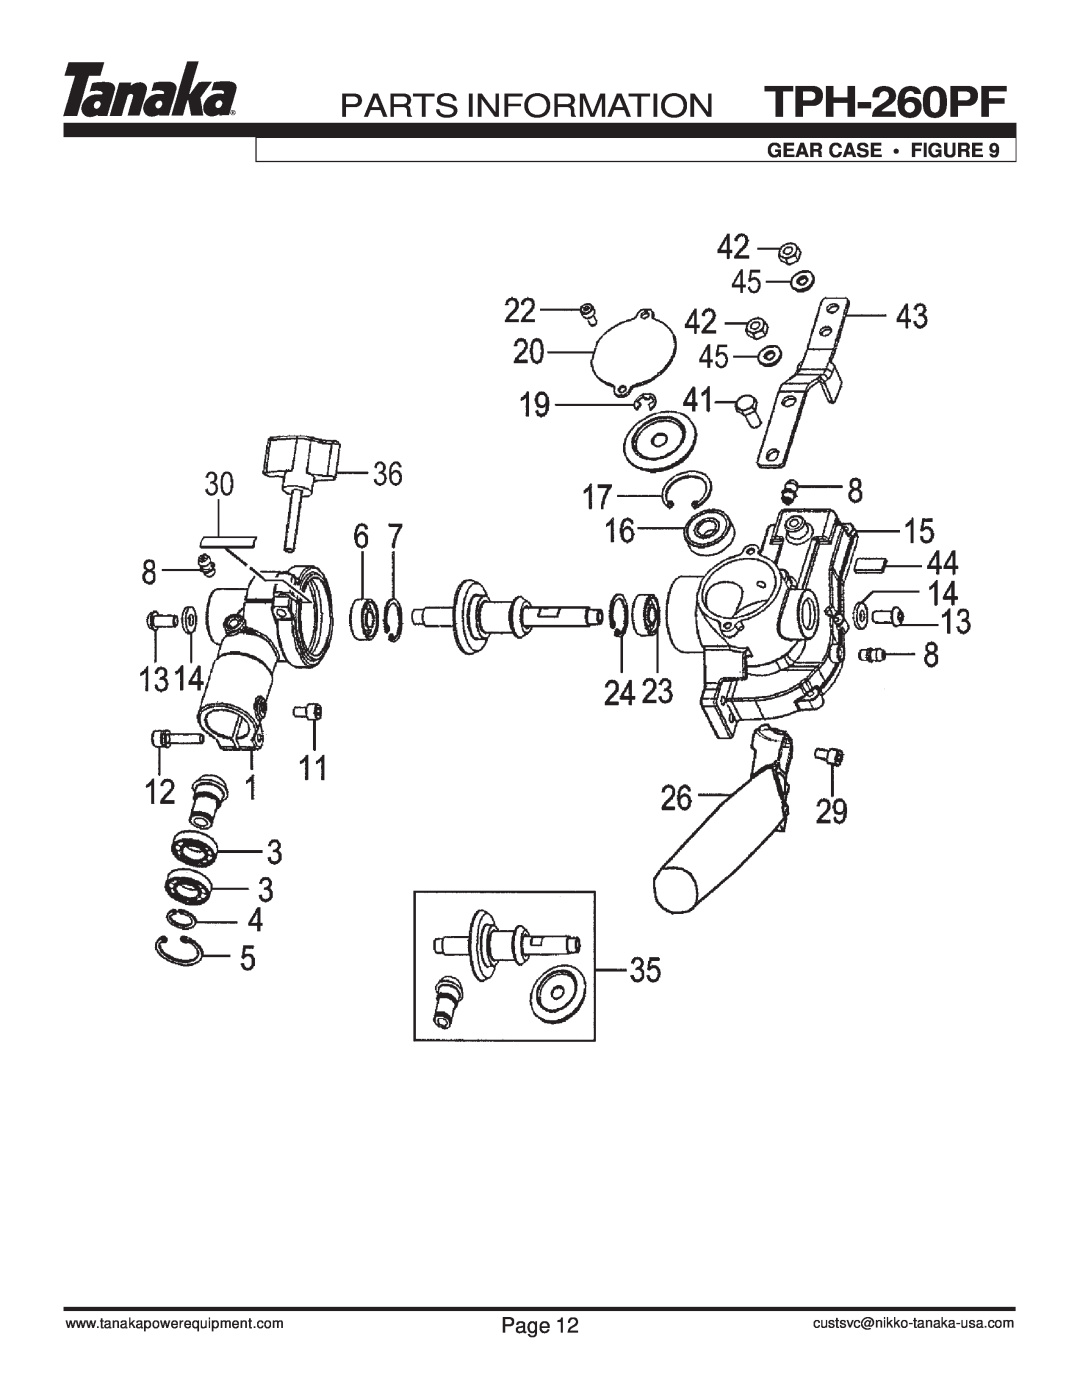 Tanaka manual Gear Case Figure, PARTS INFORMATION TPH-260PF, Page, custsvc@nikko-tanaka-usa.com 